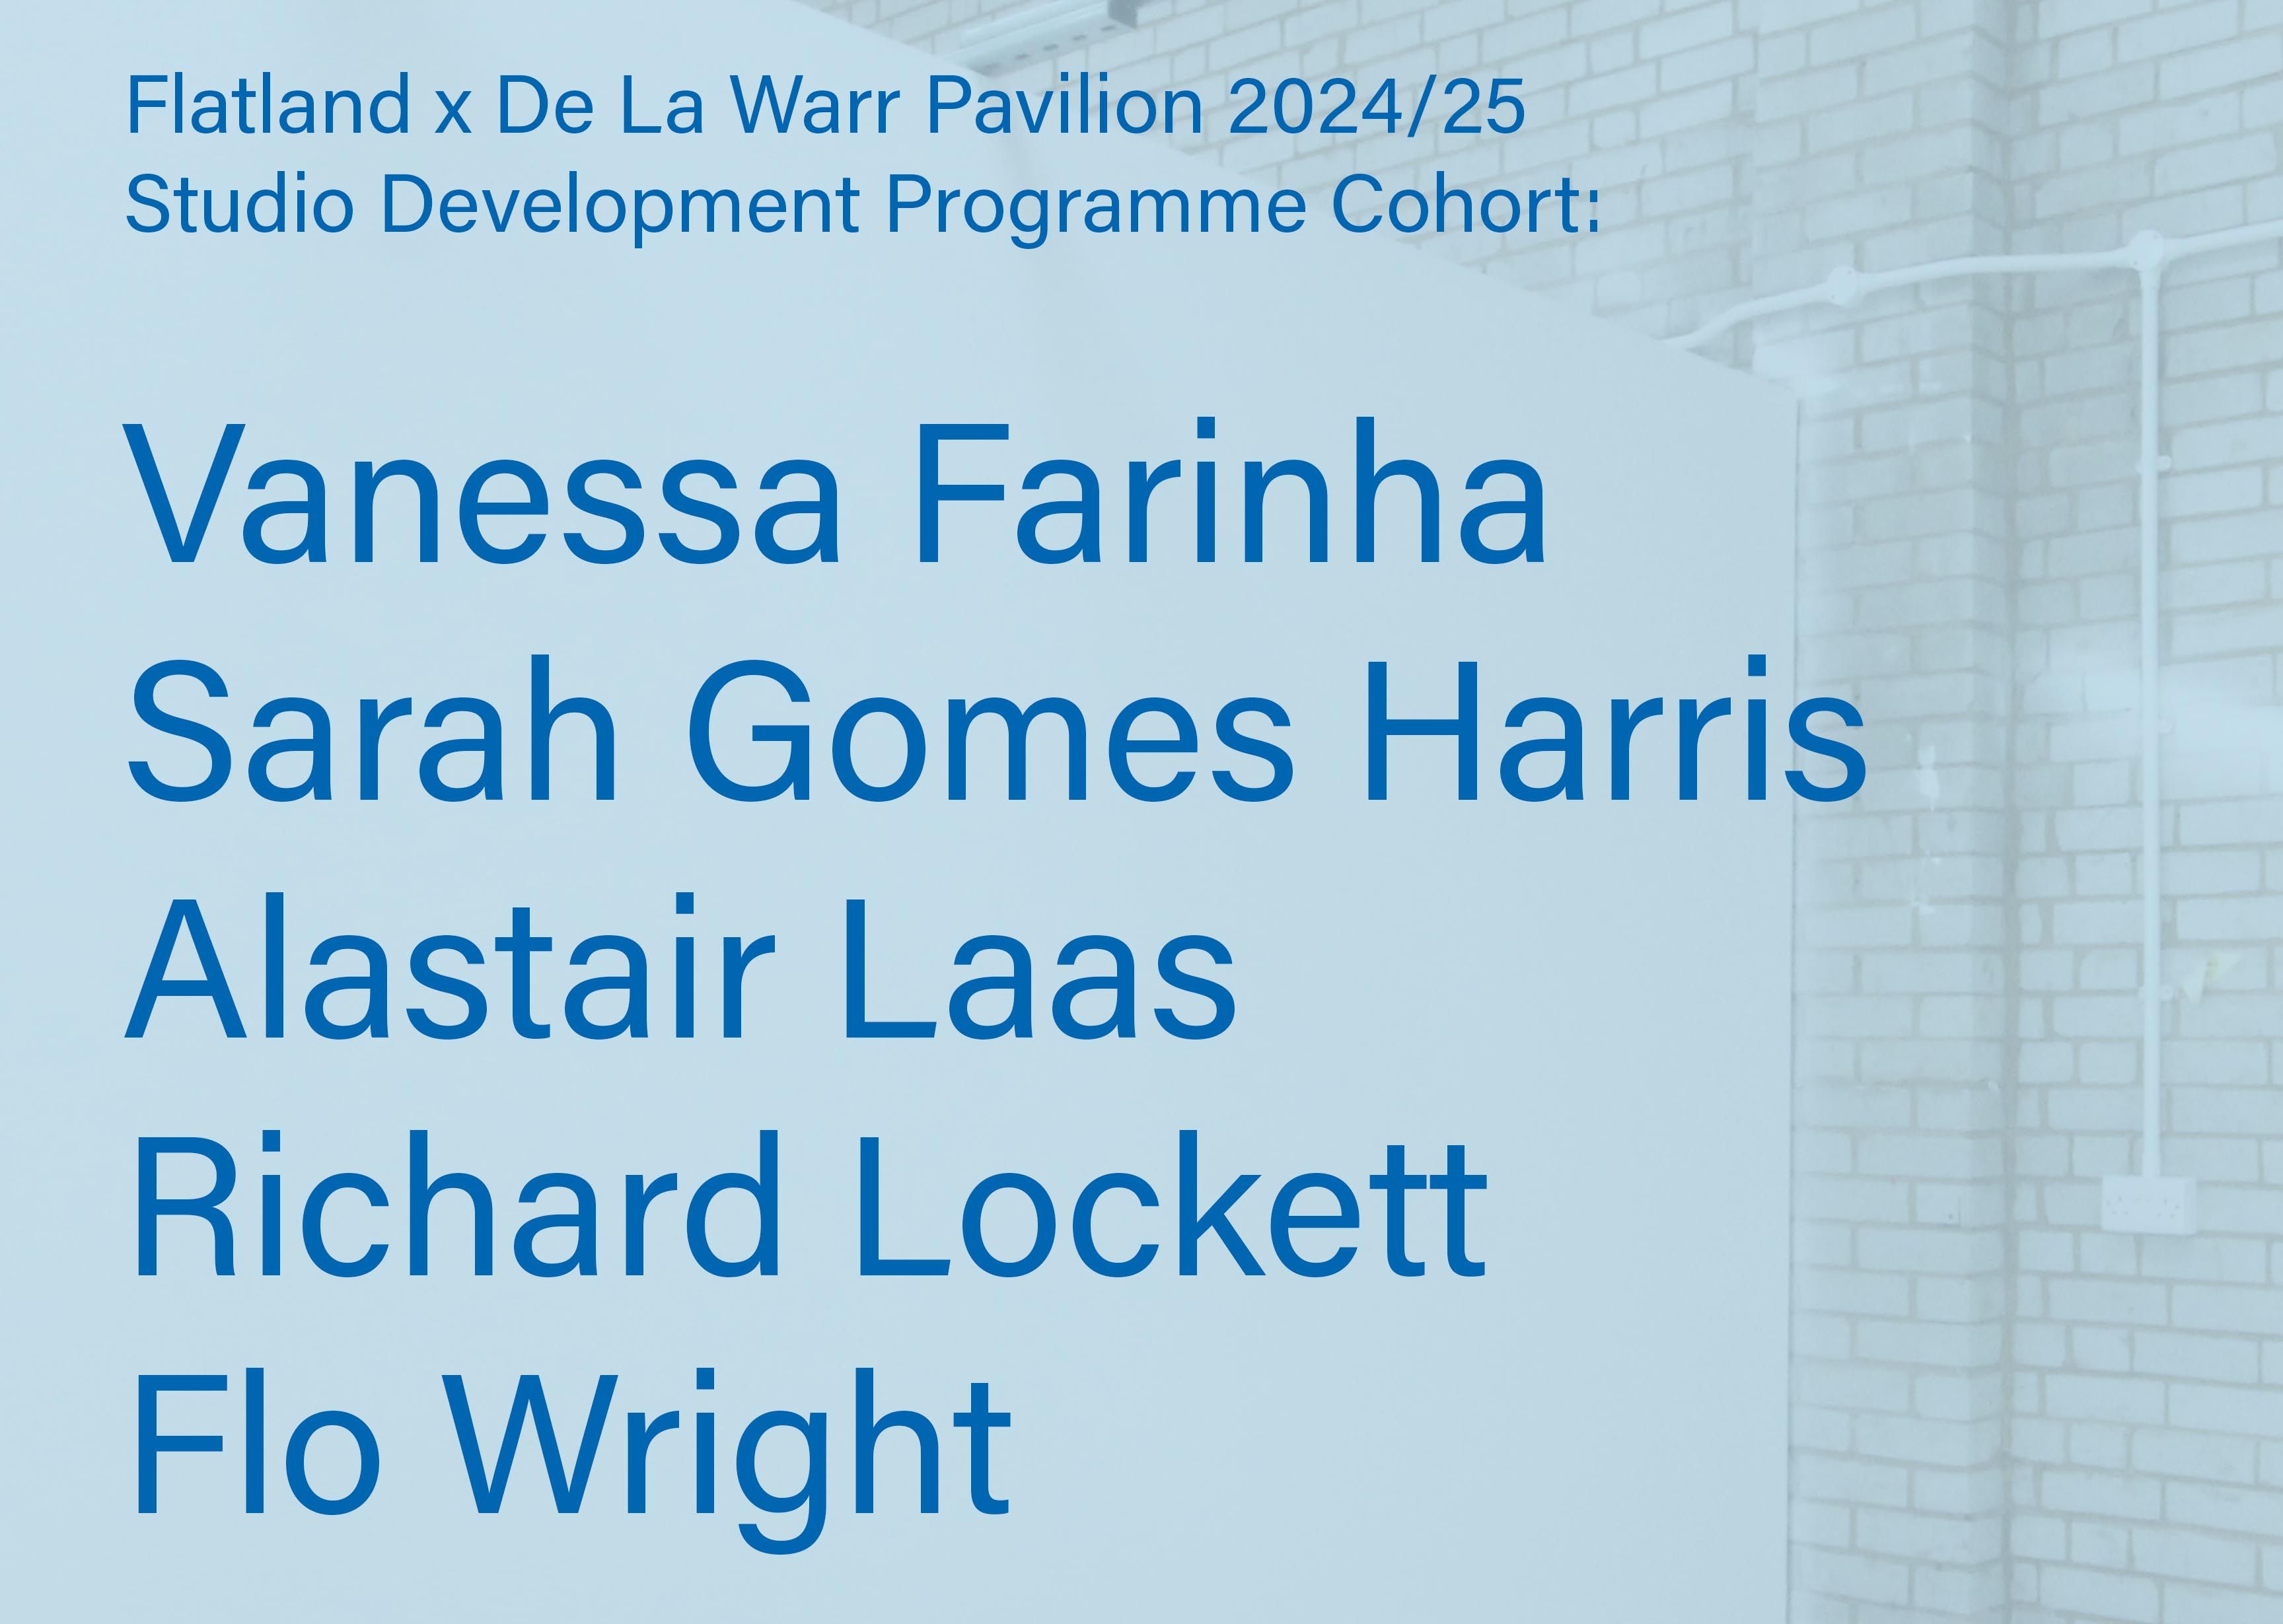 Cohort list for the Flatland X De La Warr Pavilion Studio Development Programme Artists: Vanessa Farinha, Sarah Gomes Harris, Alastair Laas, Richard Lockett and Flo Wright